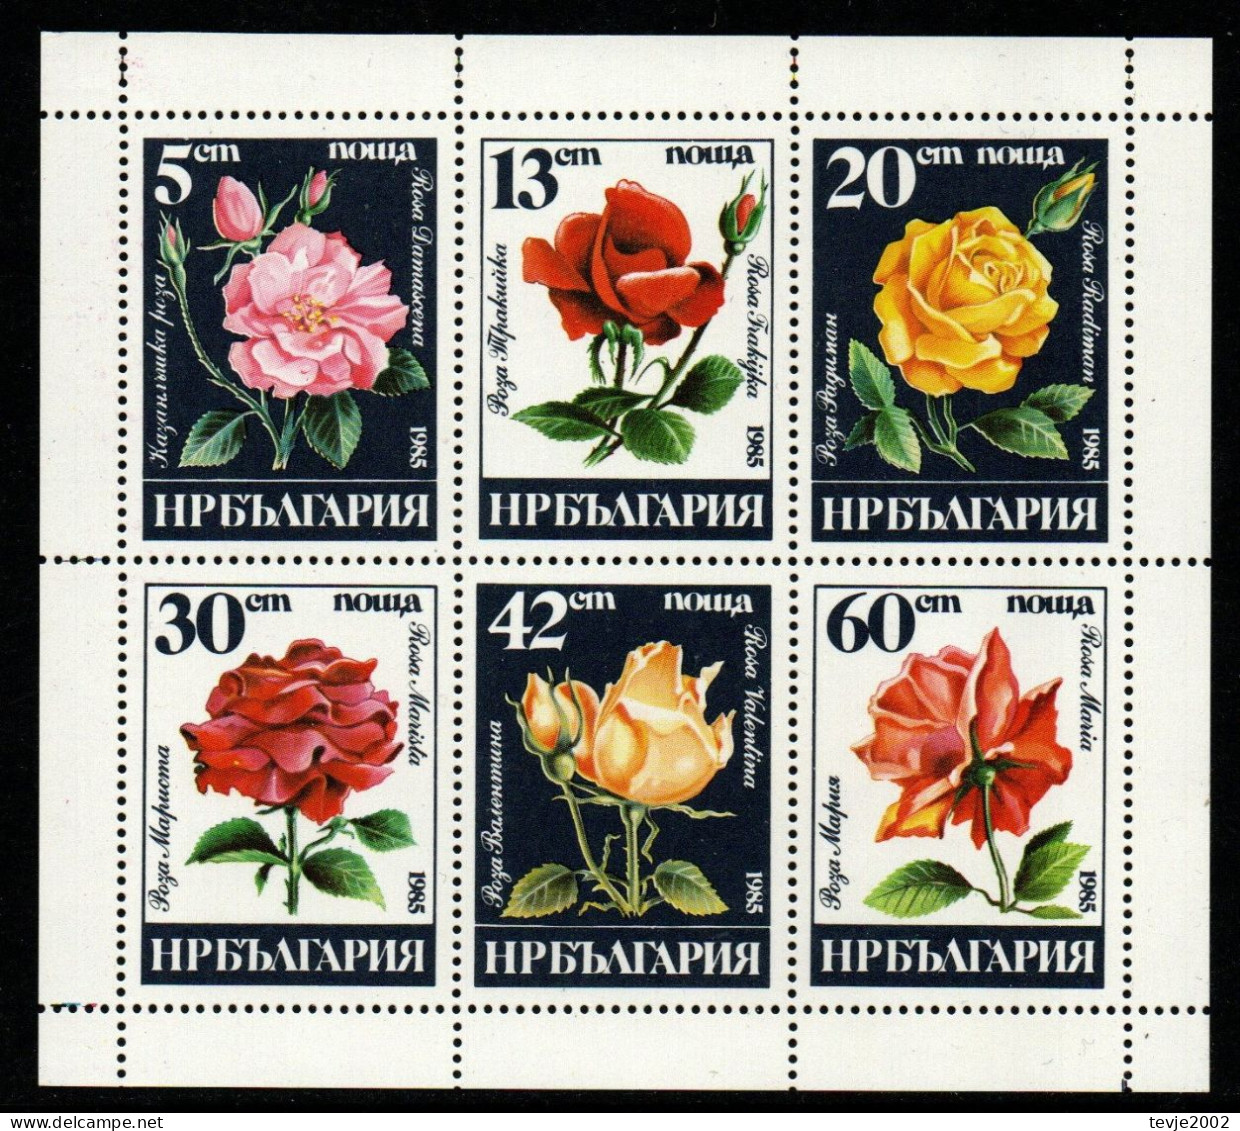 Bulgarien 1985 - Mi.Nr. 3373 - 3378 Kleinbogen - Postfrisch MNH - Blumen Flowers Rosen Roses - Roses